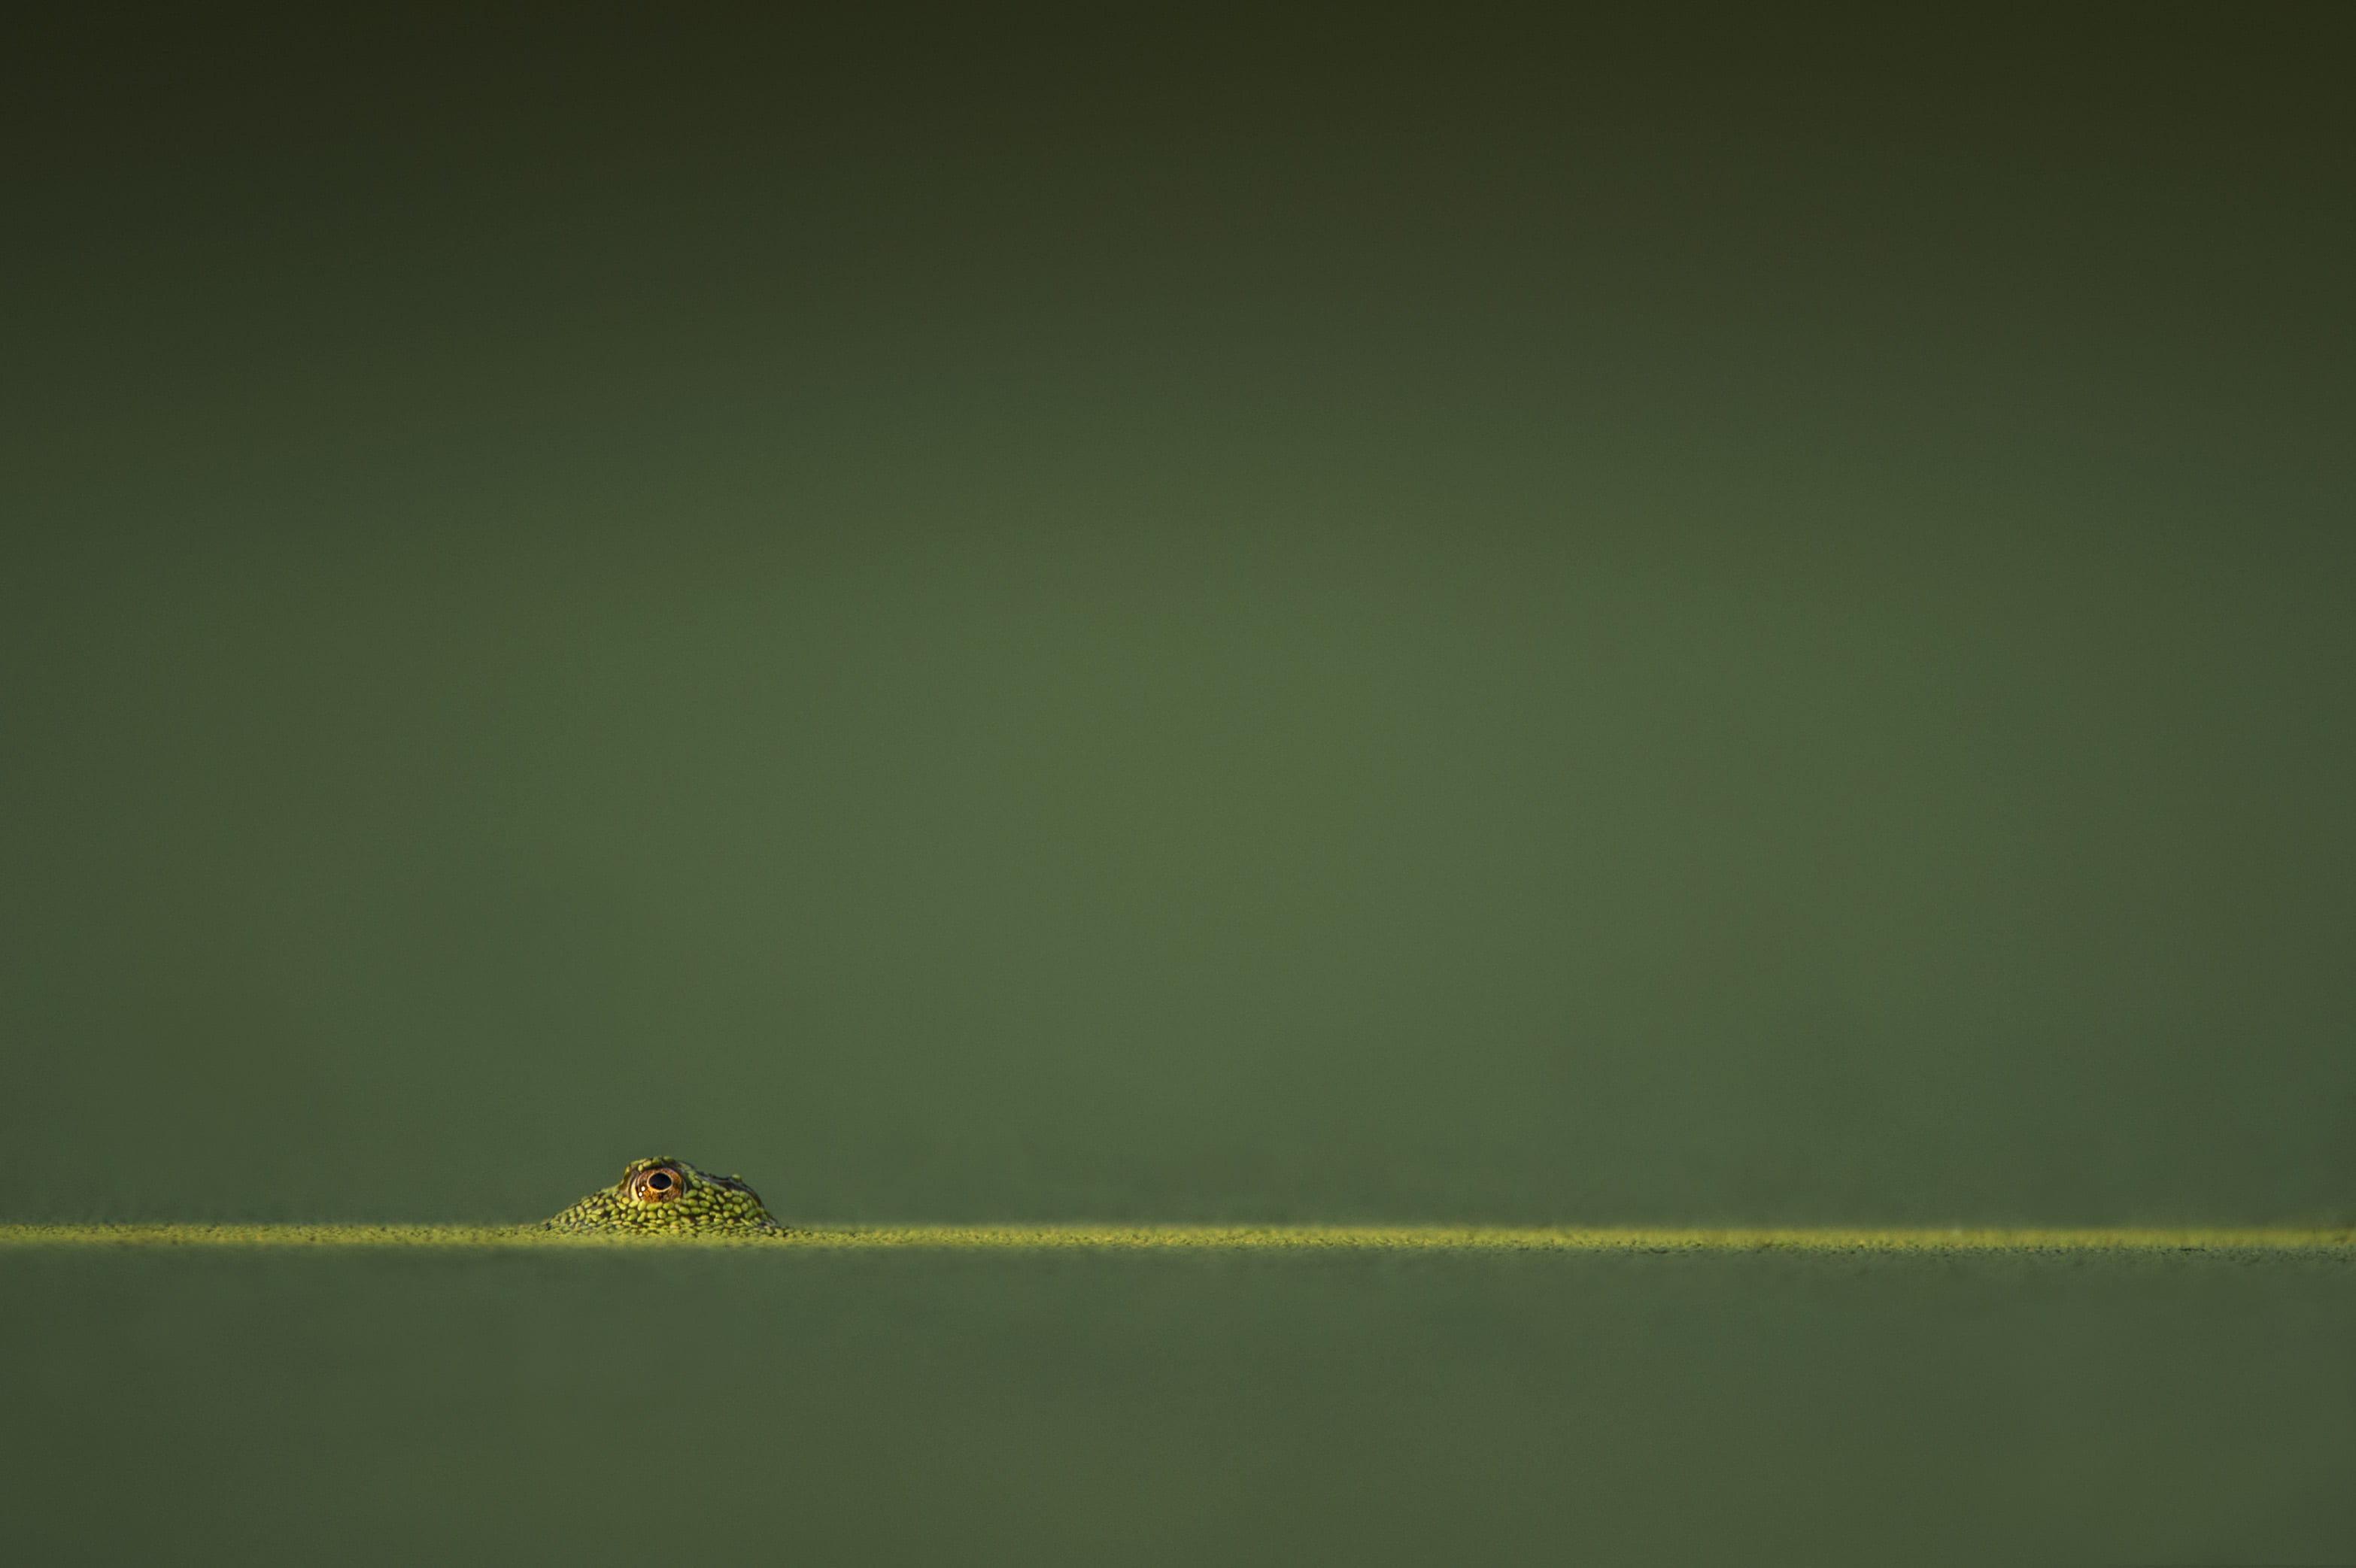 green amphibian in green water, macro shot photo of animal eye